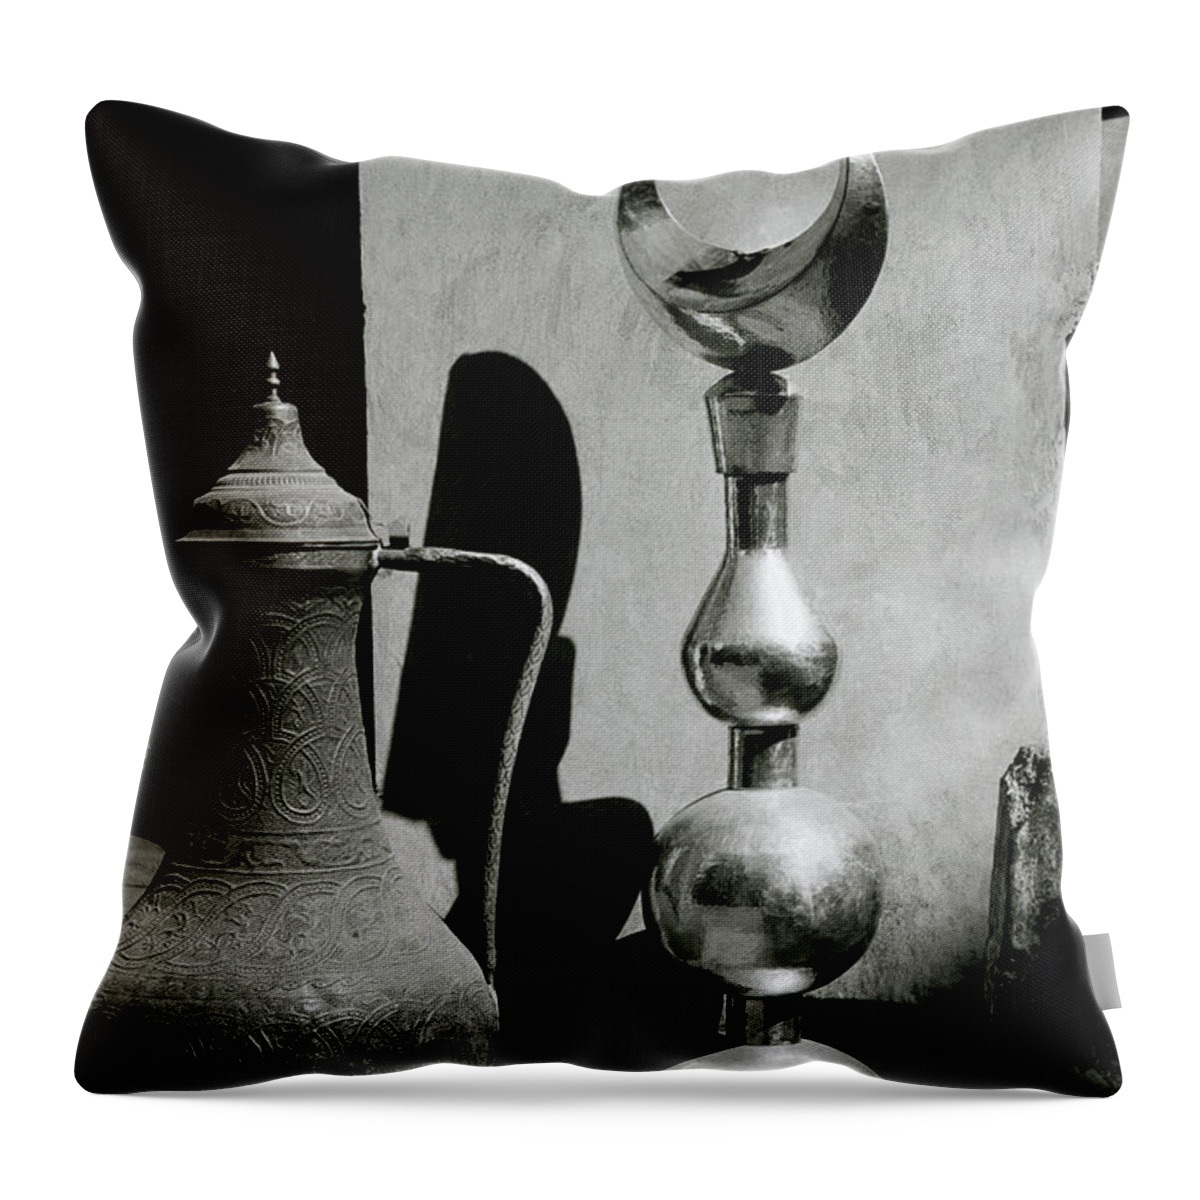 Cairo Throw Pillow featuring the photograph Islamic Chiaroscuro by Shaun Higson